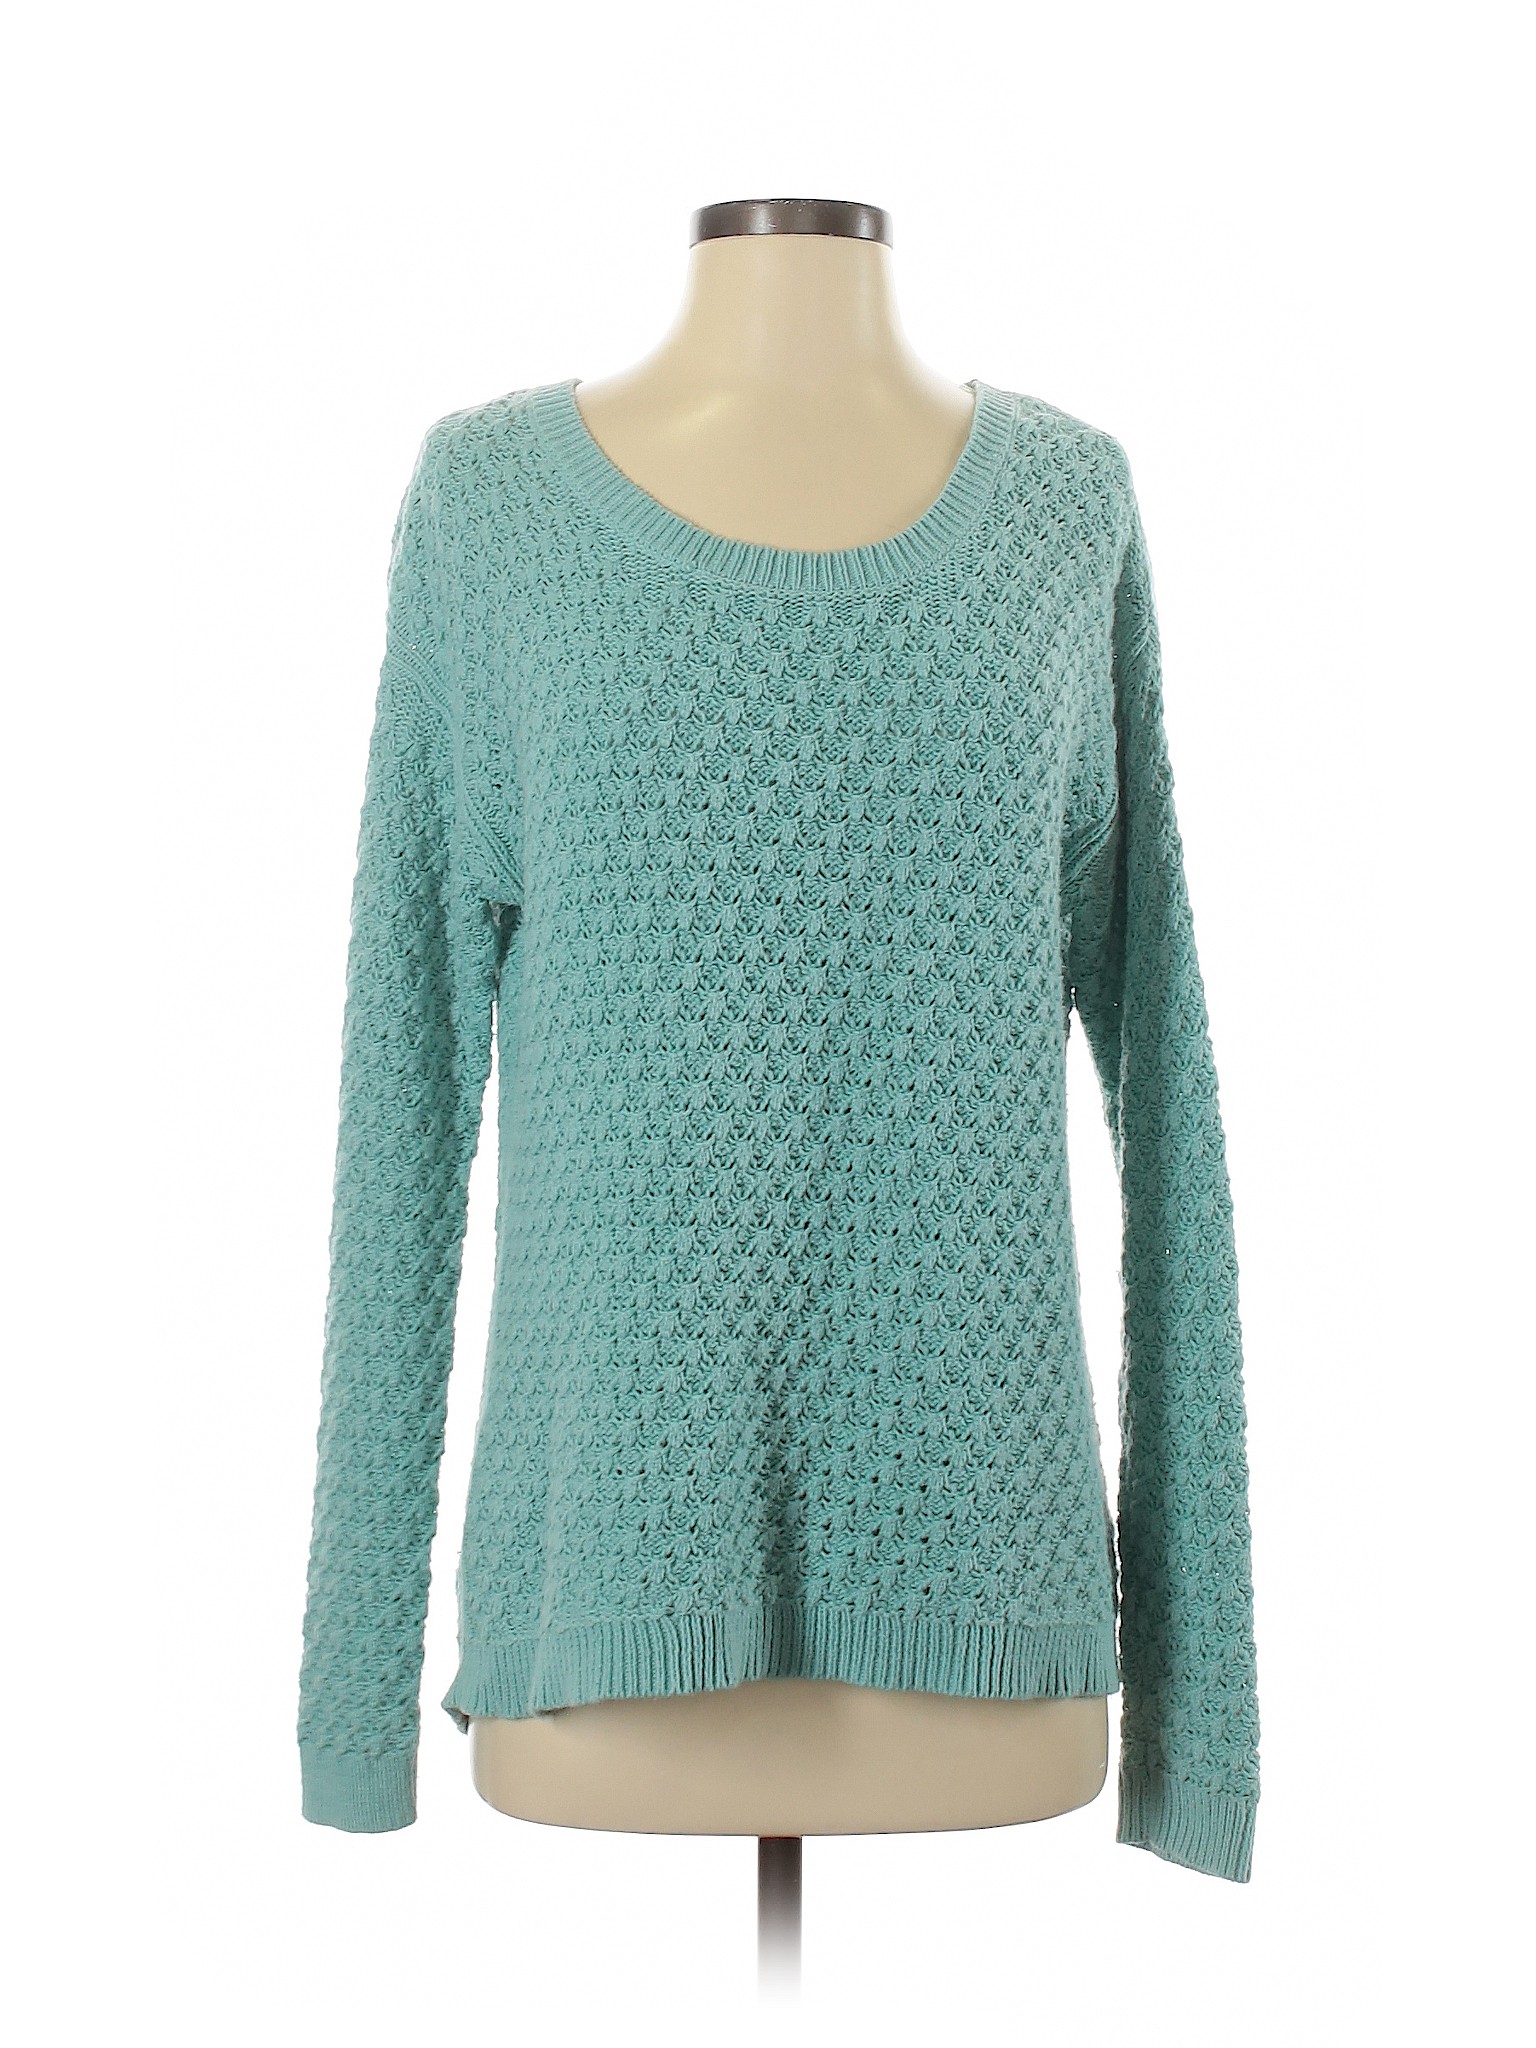 Old Navy Women Green Pullover Sweater S | eBay